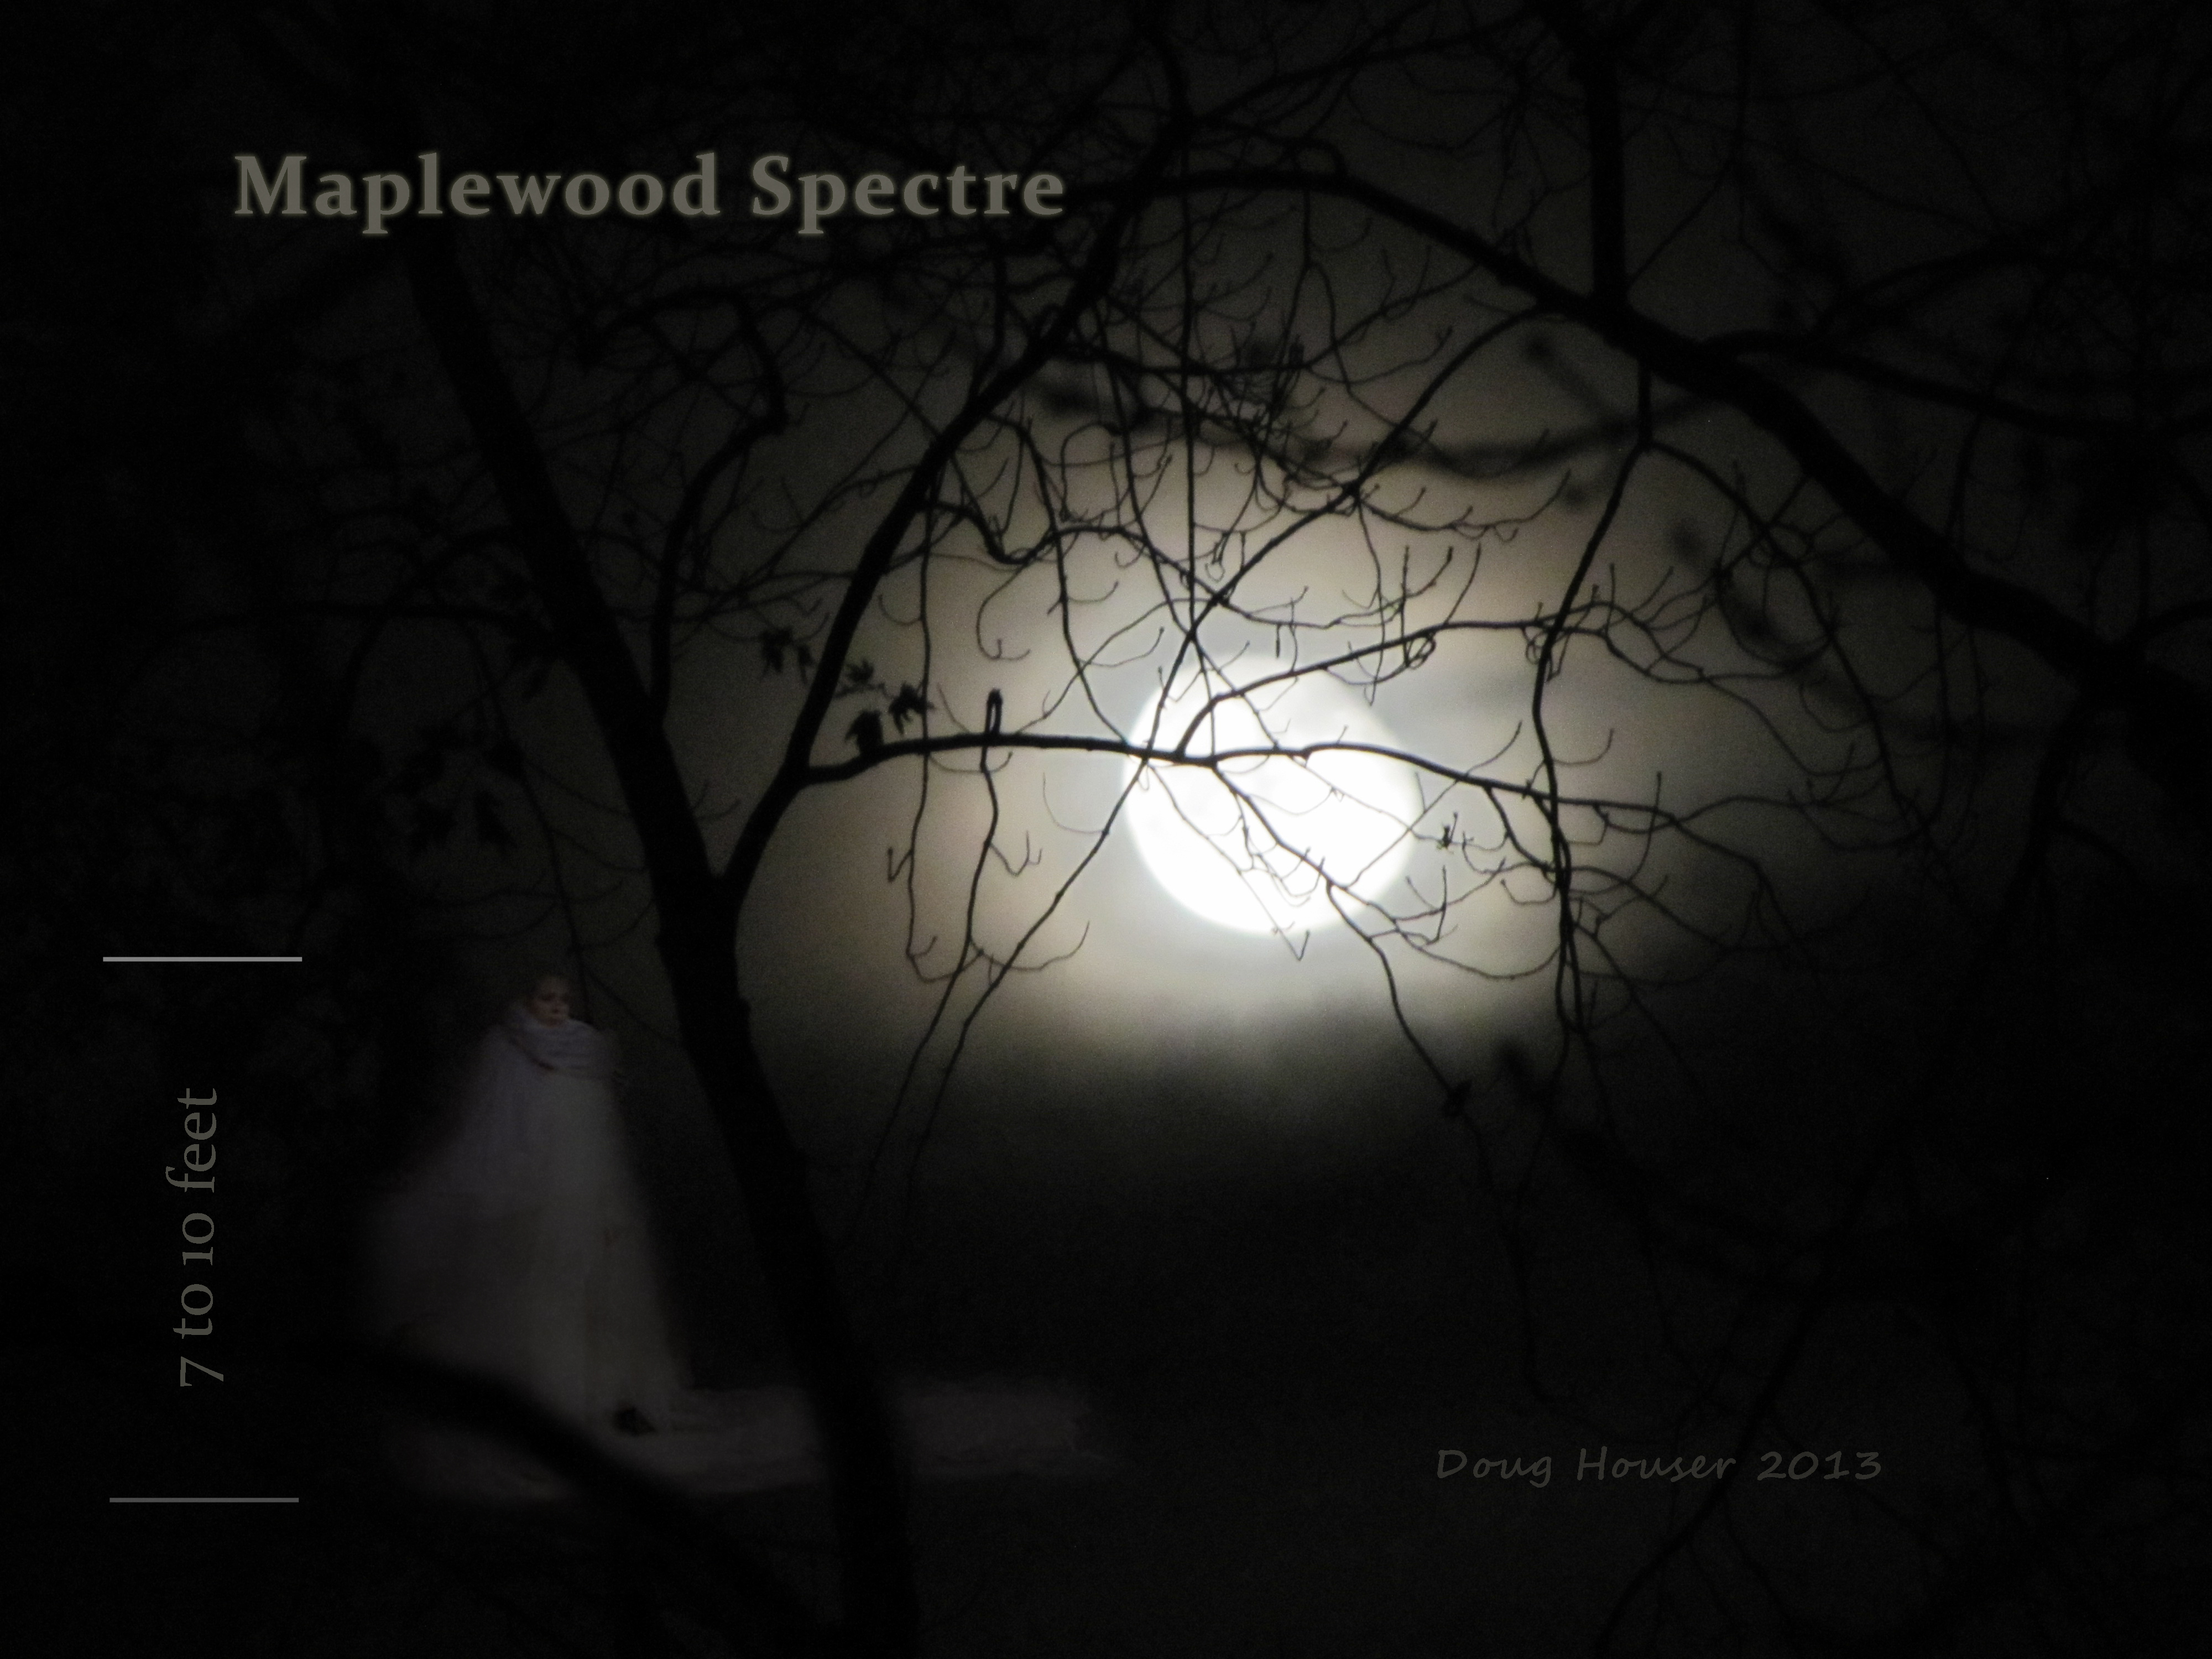 7 Foot Maplewood Spectre Grew 3 Feet in 6 Blocks